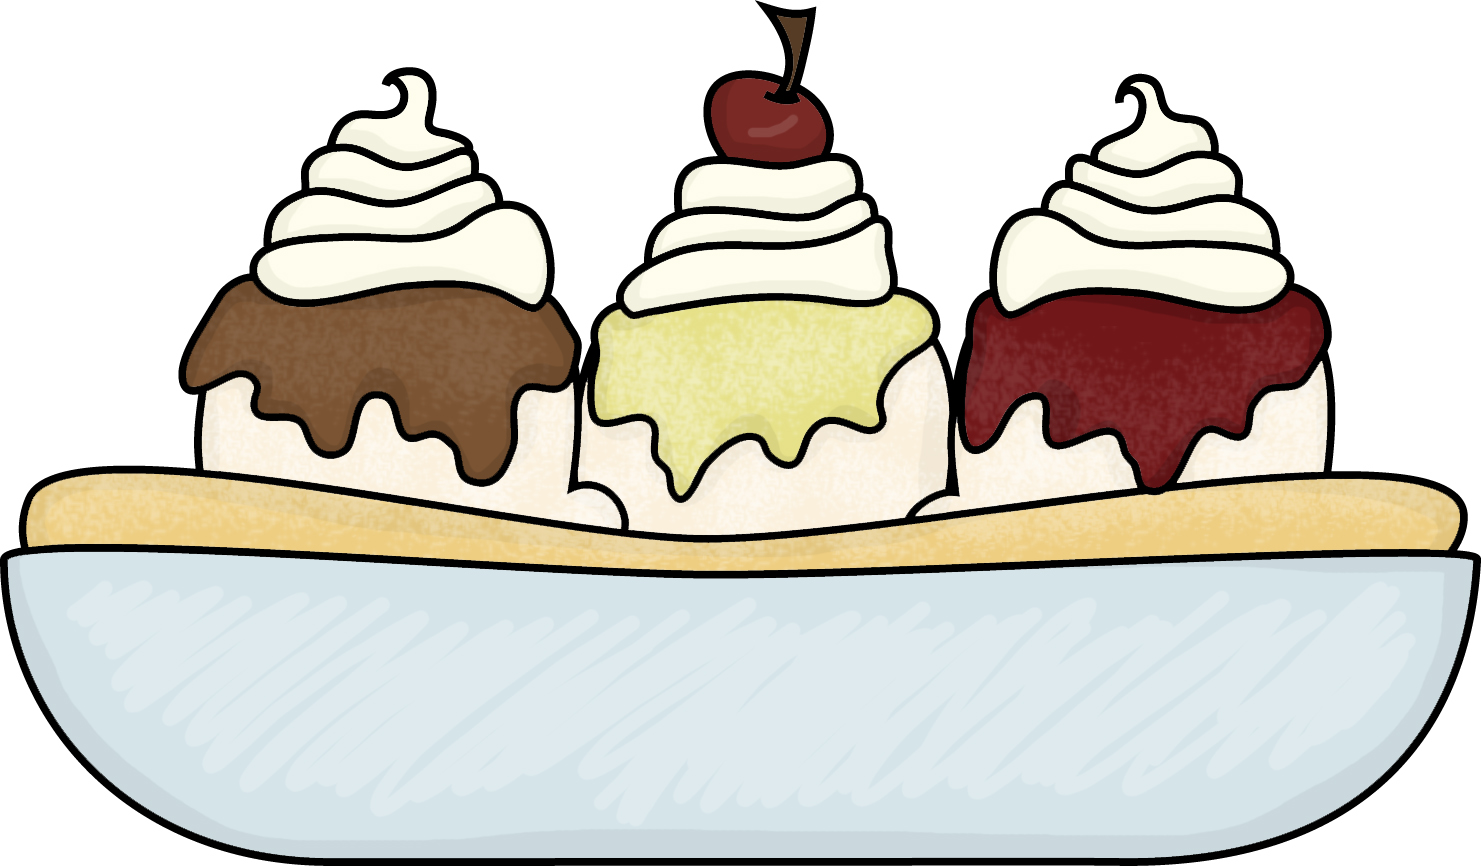 clipart of ice cream sundae - photo #38